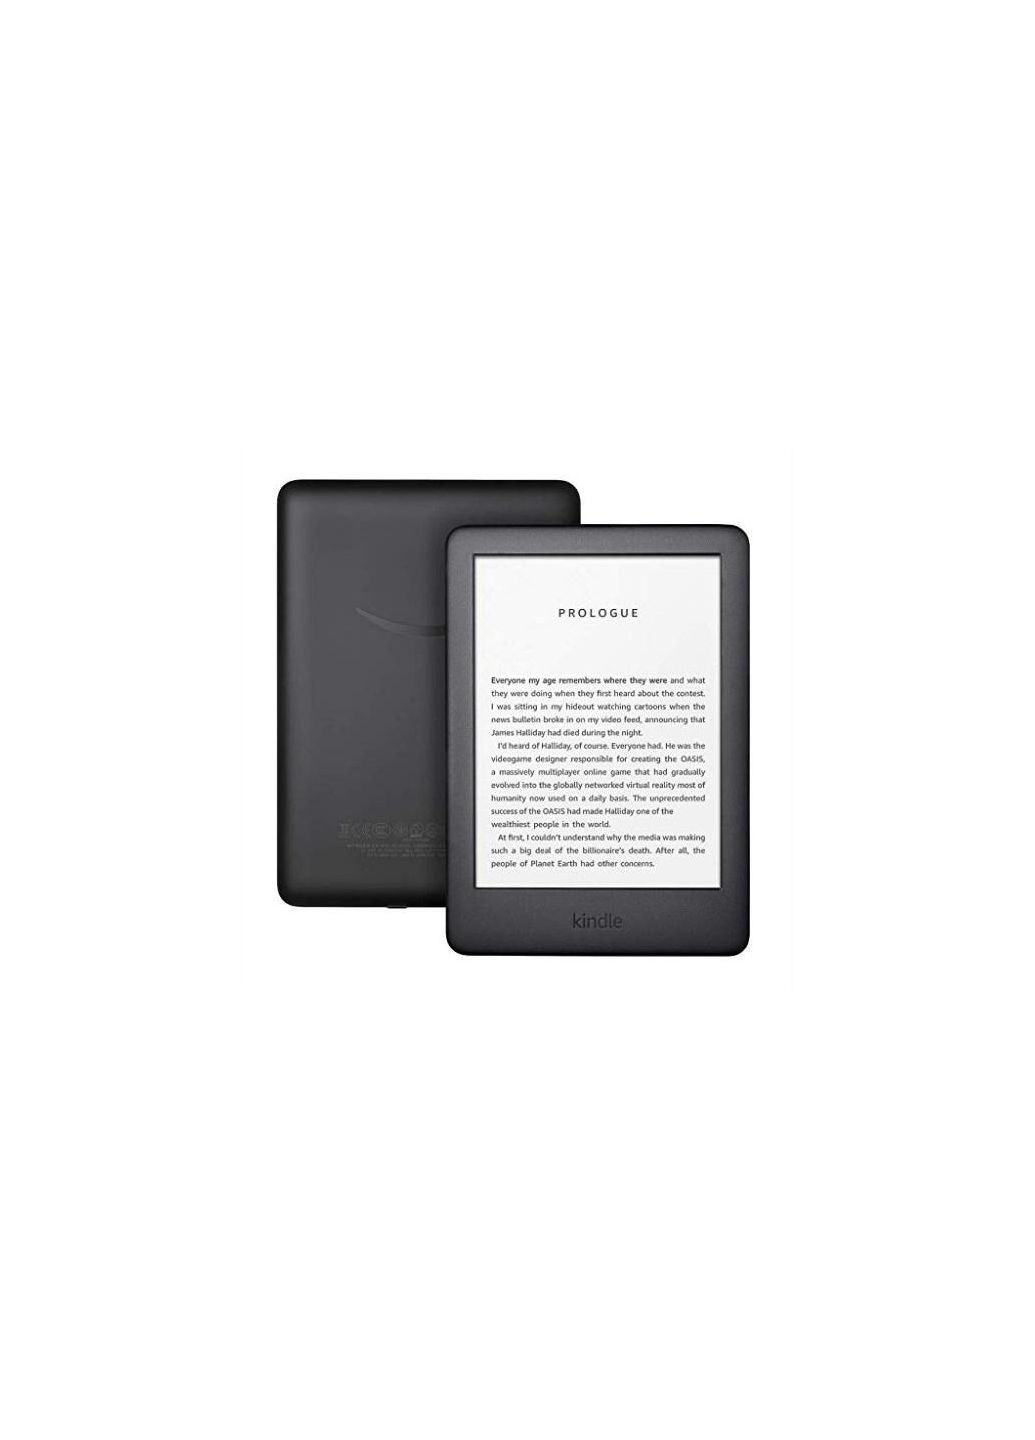 Электронная книга Kindle 10th Gen. 2019 Black 8Gb Certified Refurbished Amazon (280438632)